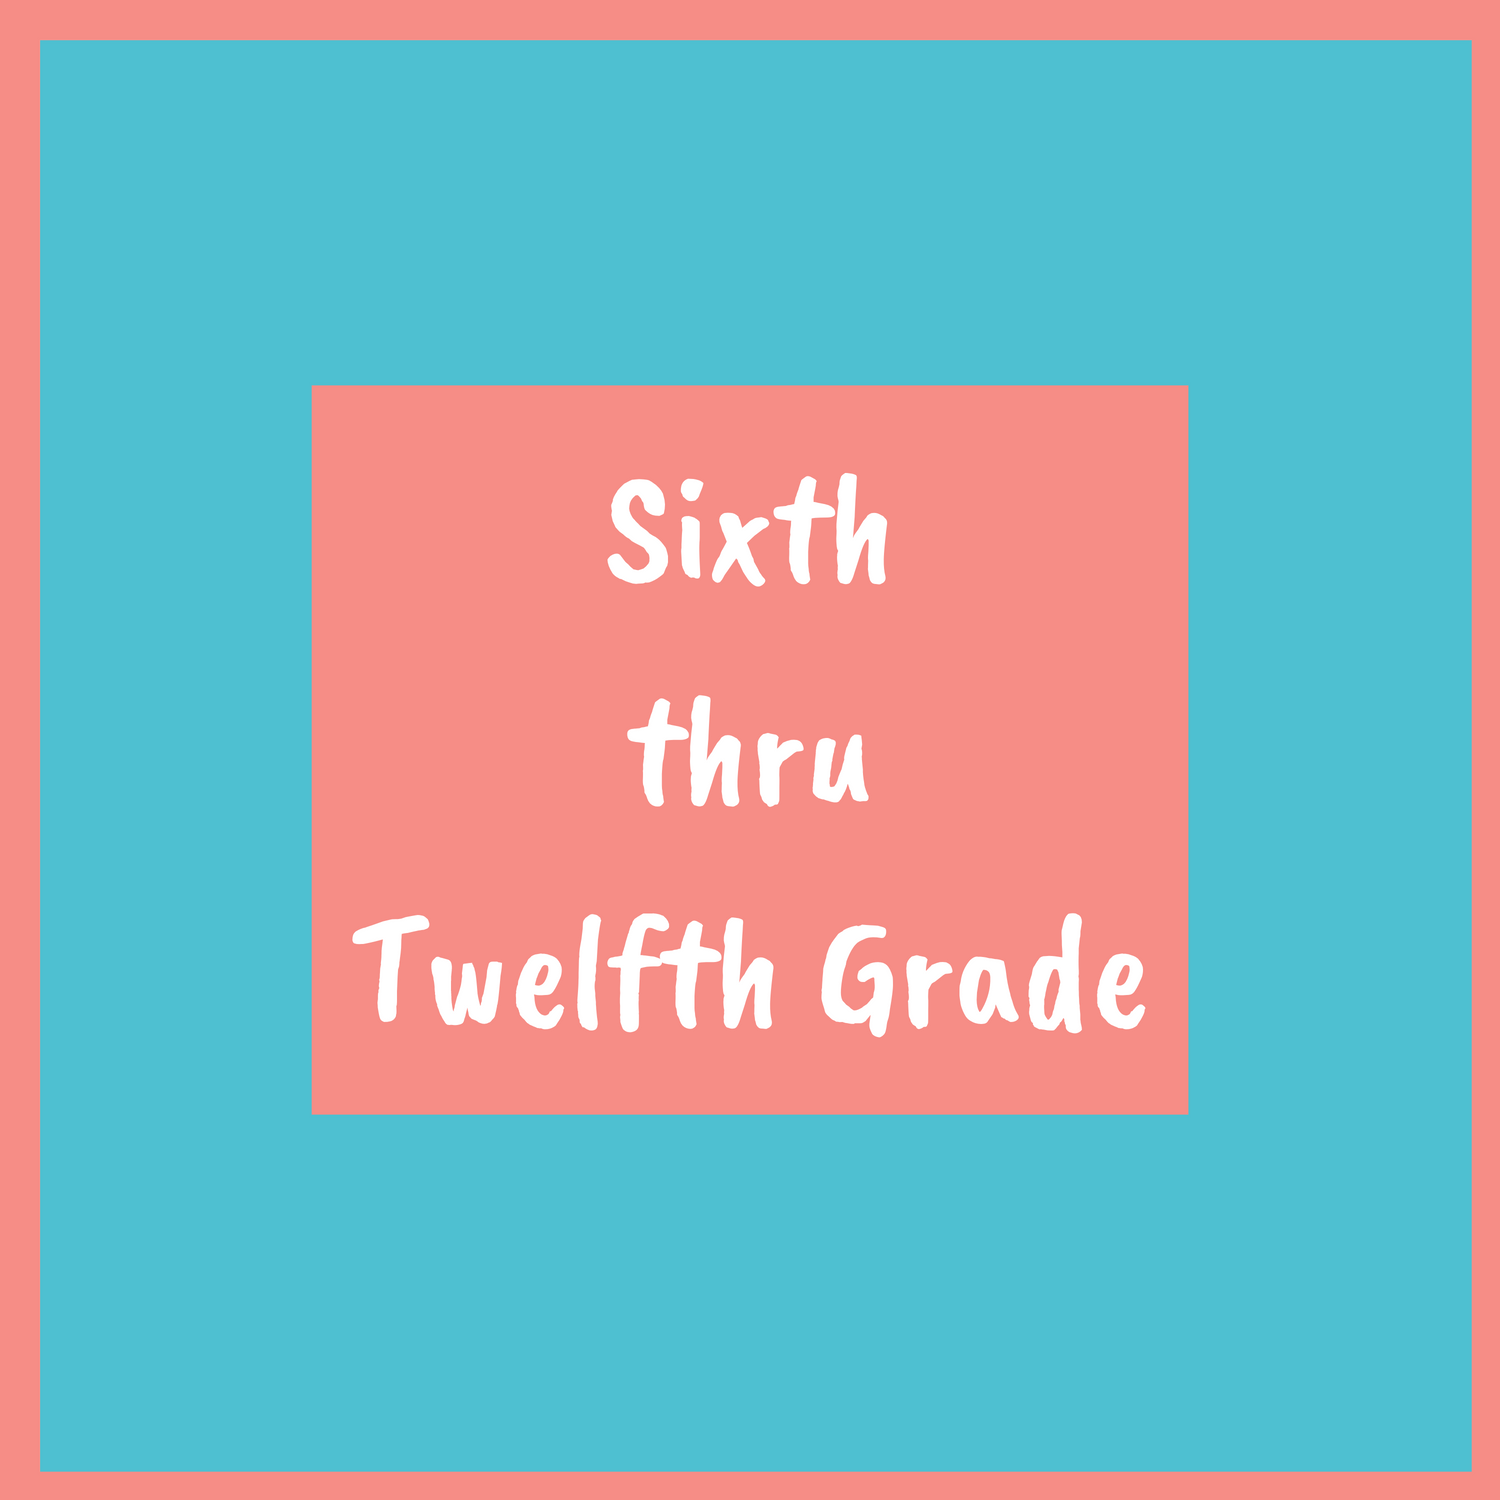 Sixth thru Twelfth Grade